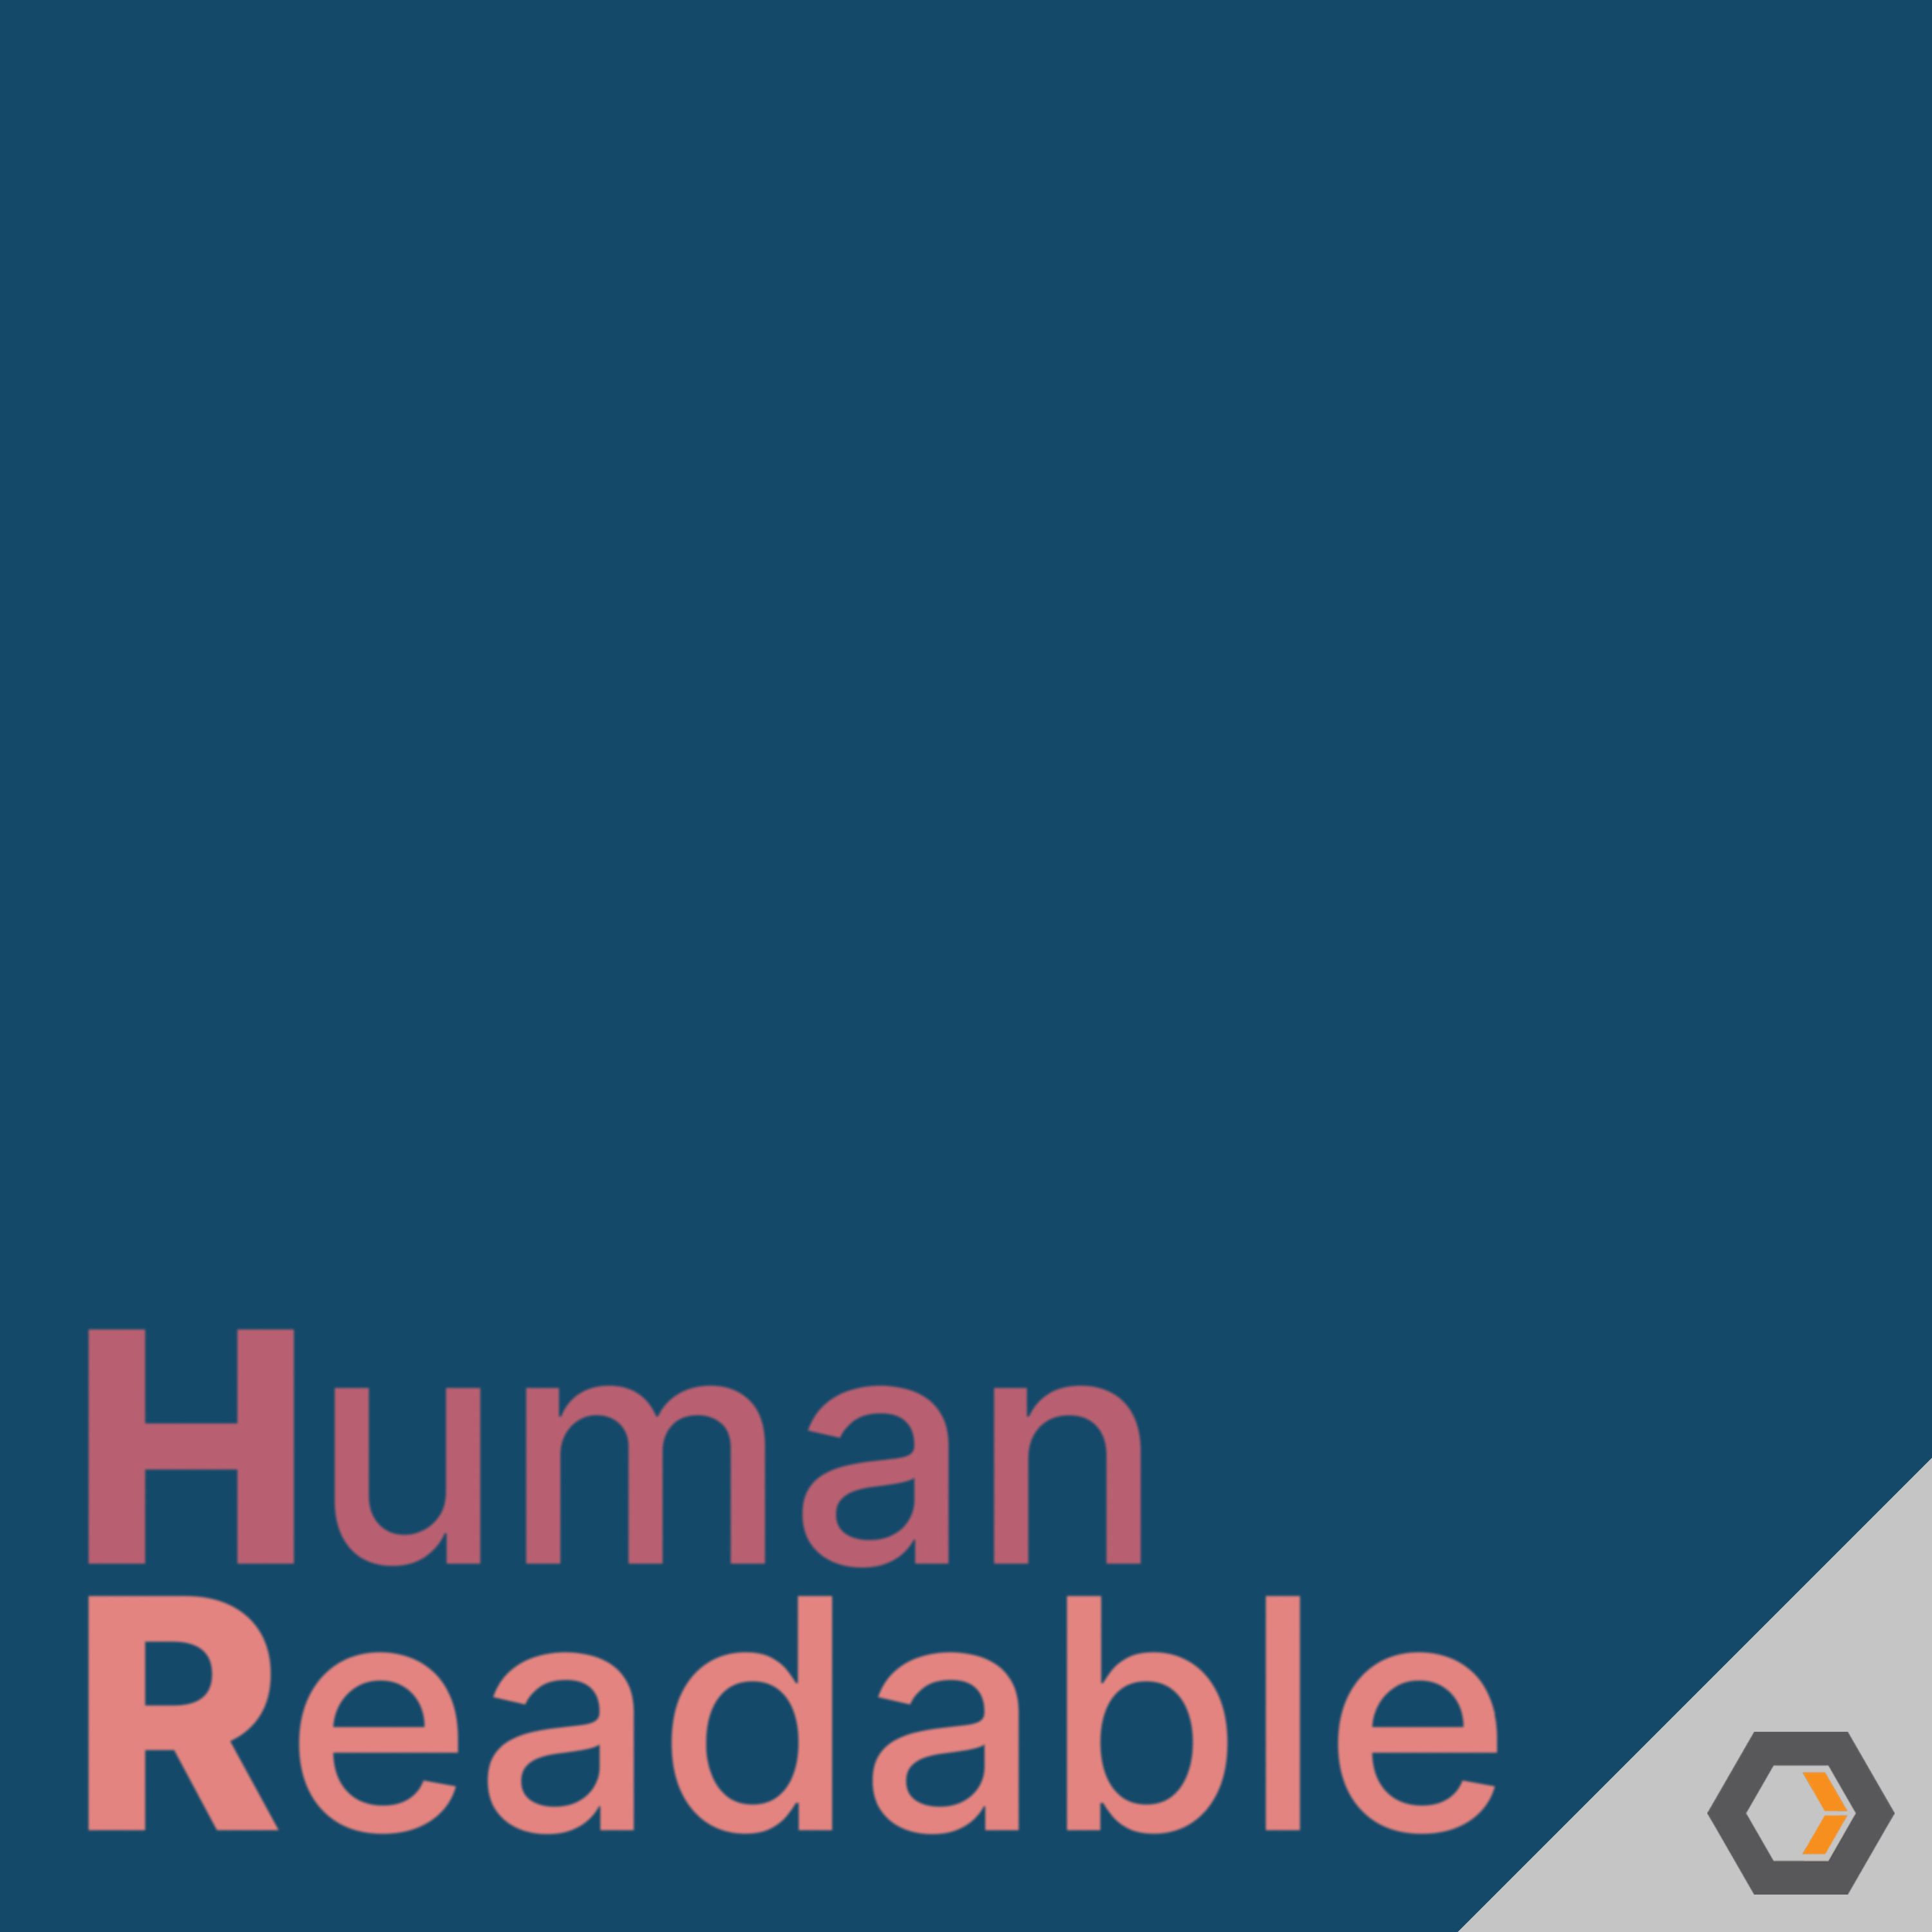 Human Readable